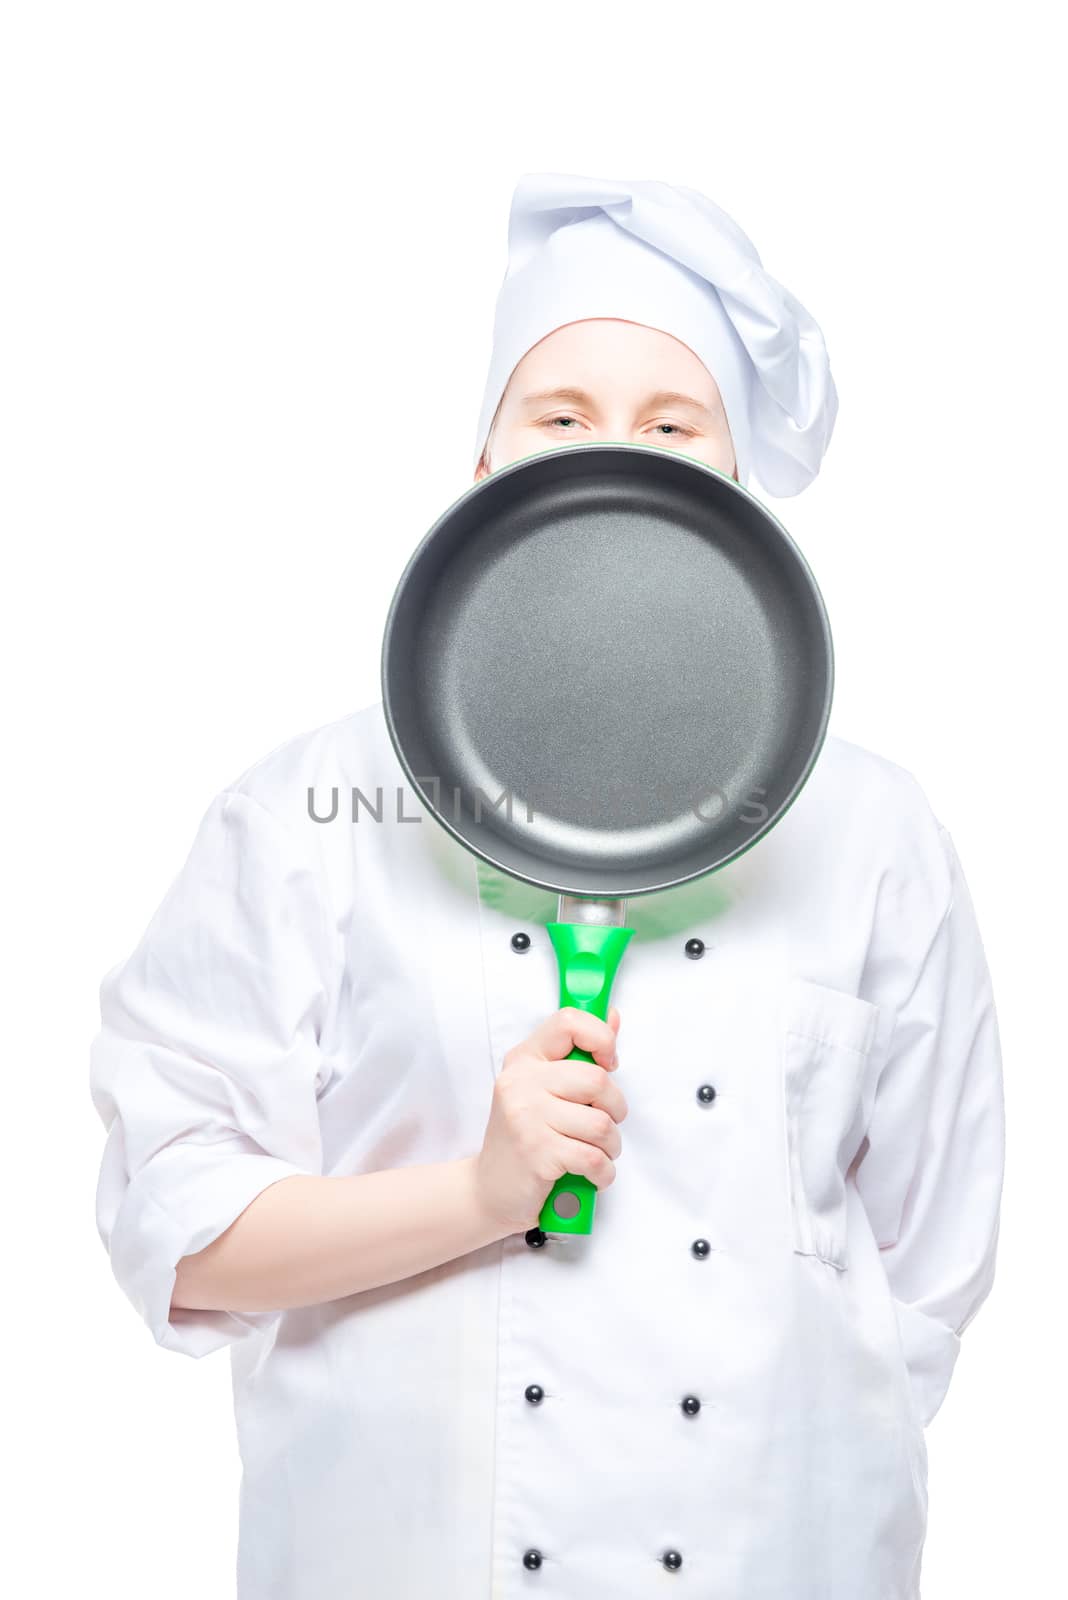 cook peeking from behind the frying pan, studio shot on white